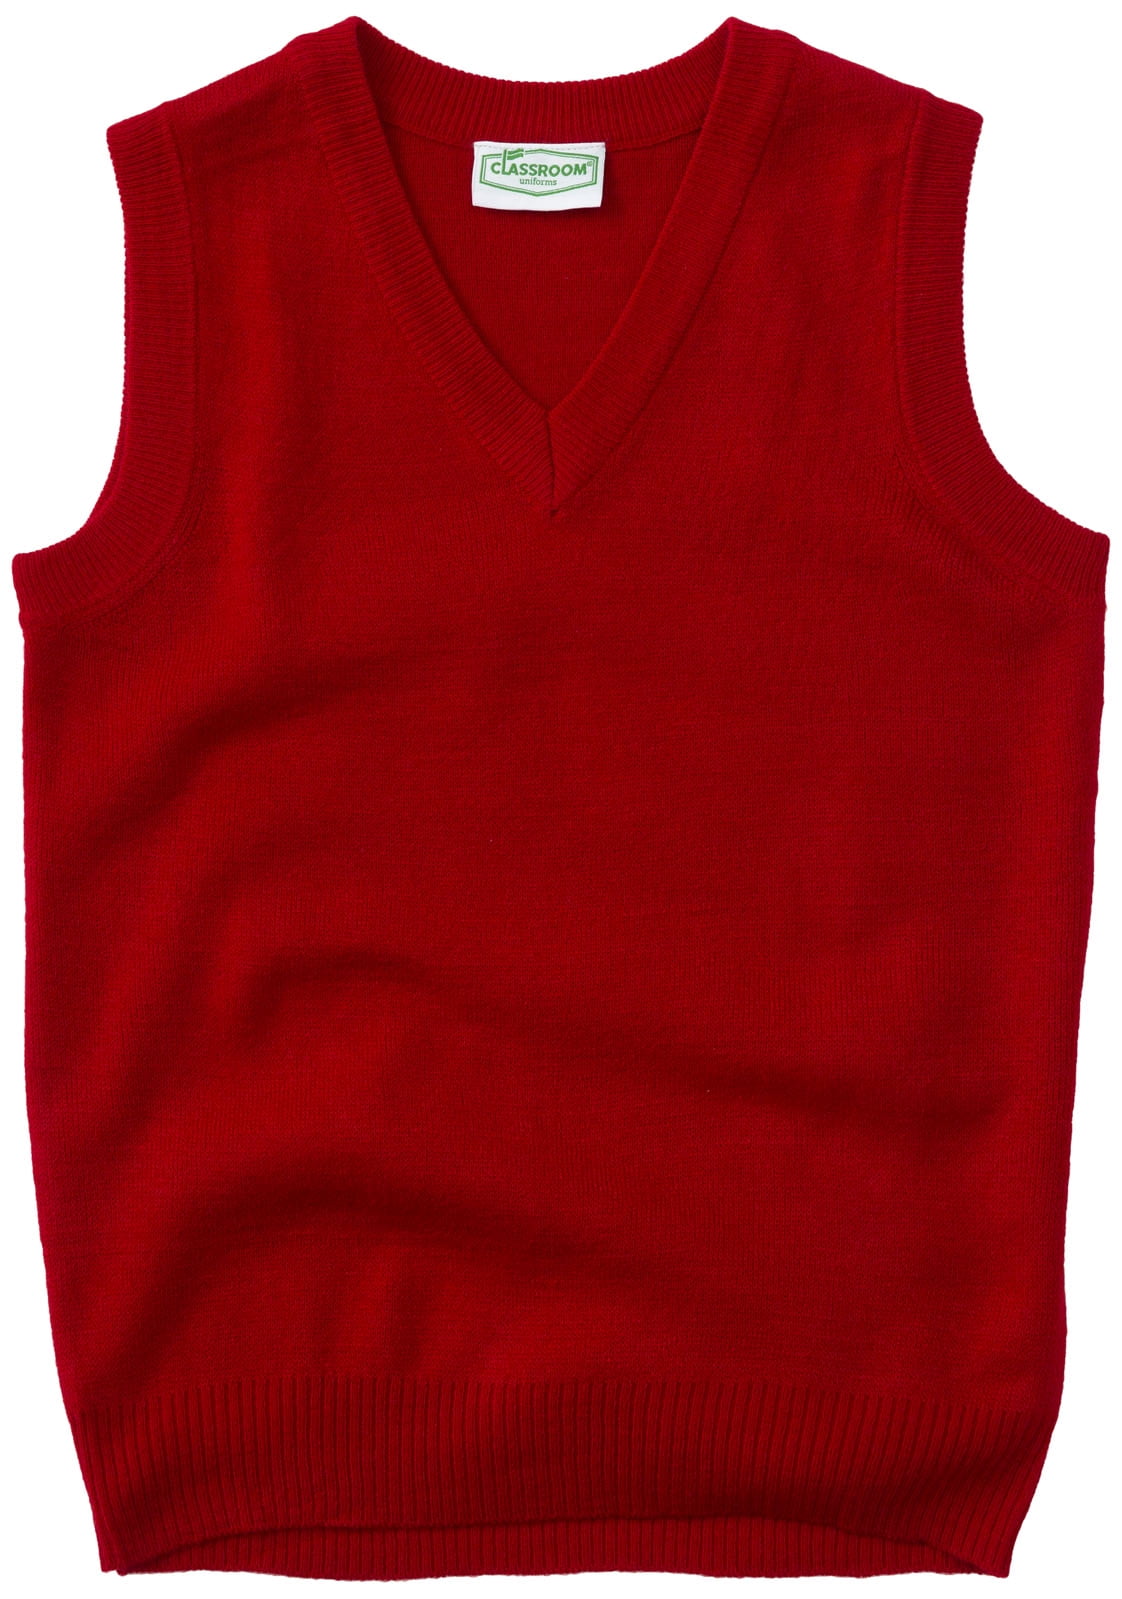 Classroom School Uniforms Adult V-Neck Sweater Vest 56914, 2XL, Red